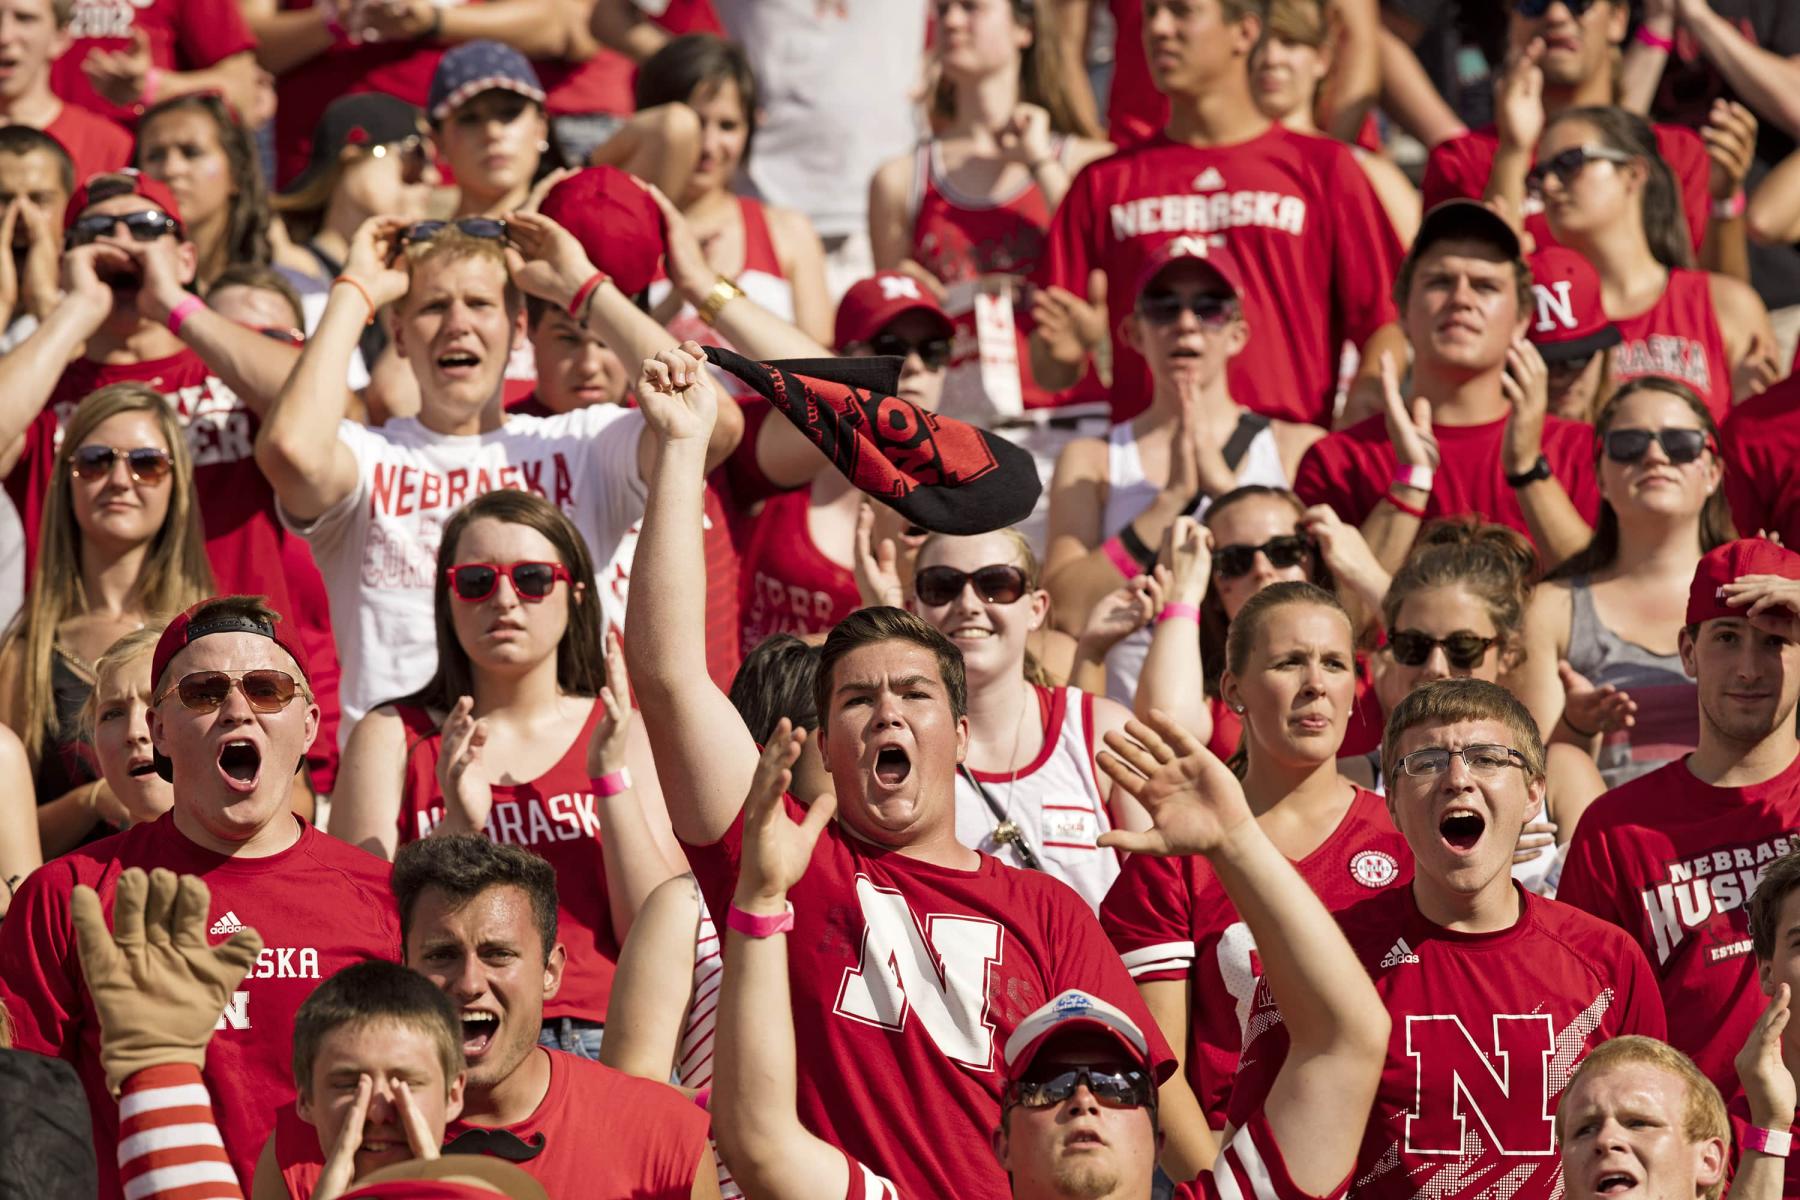 Students cheer during a Nebraska football game